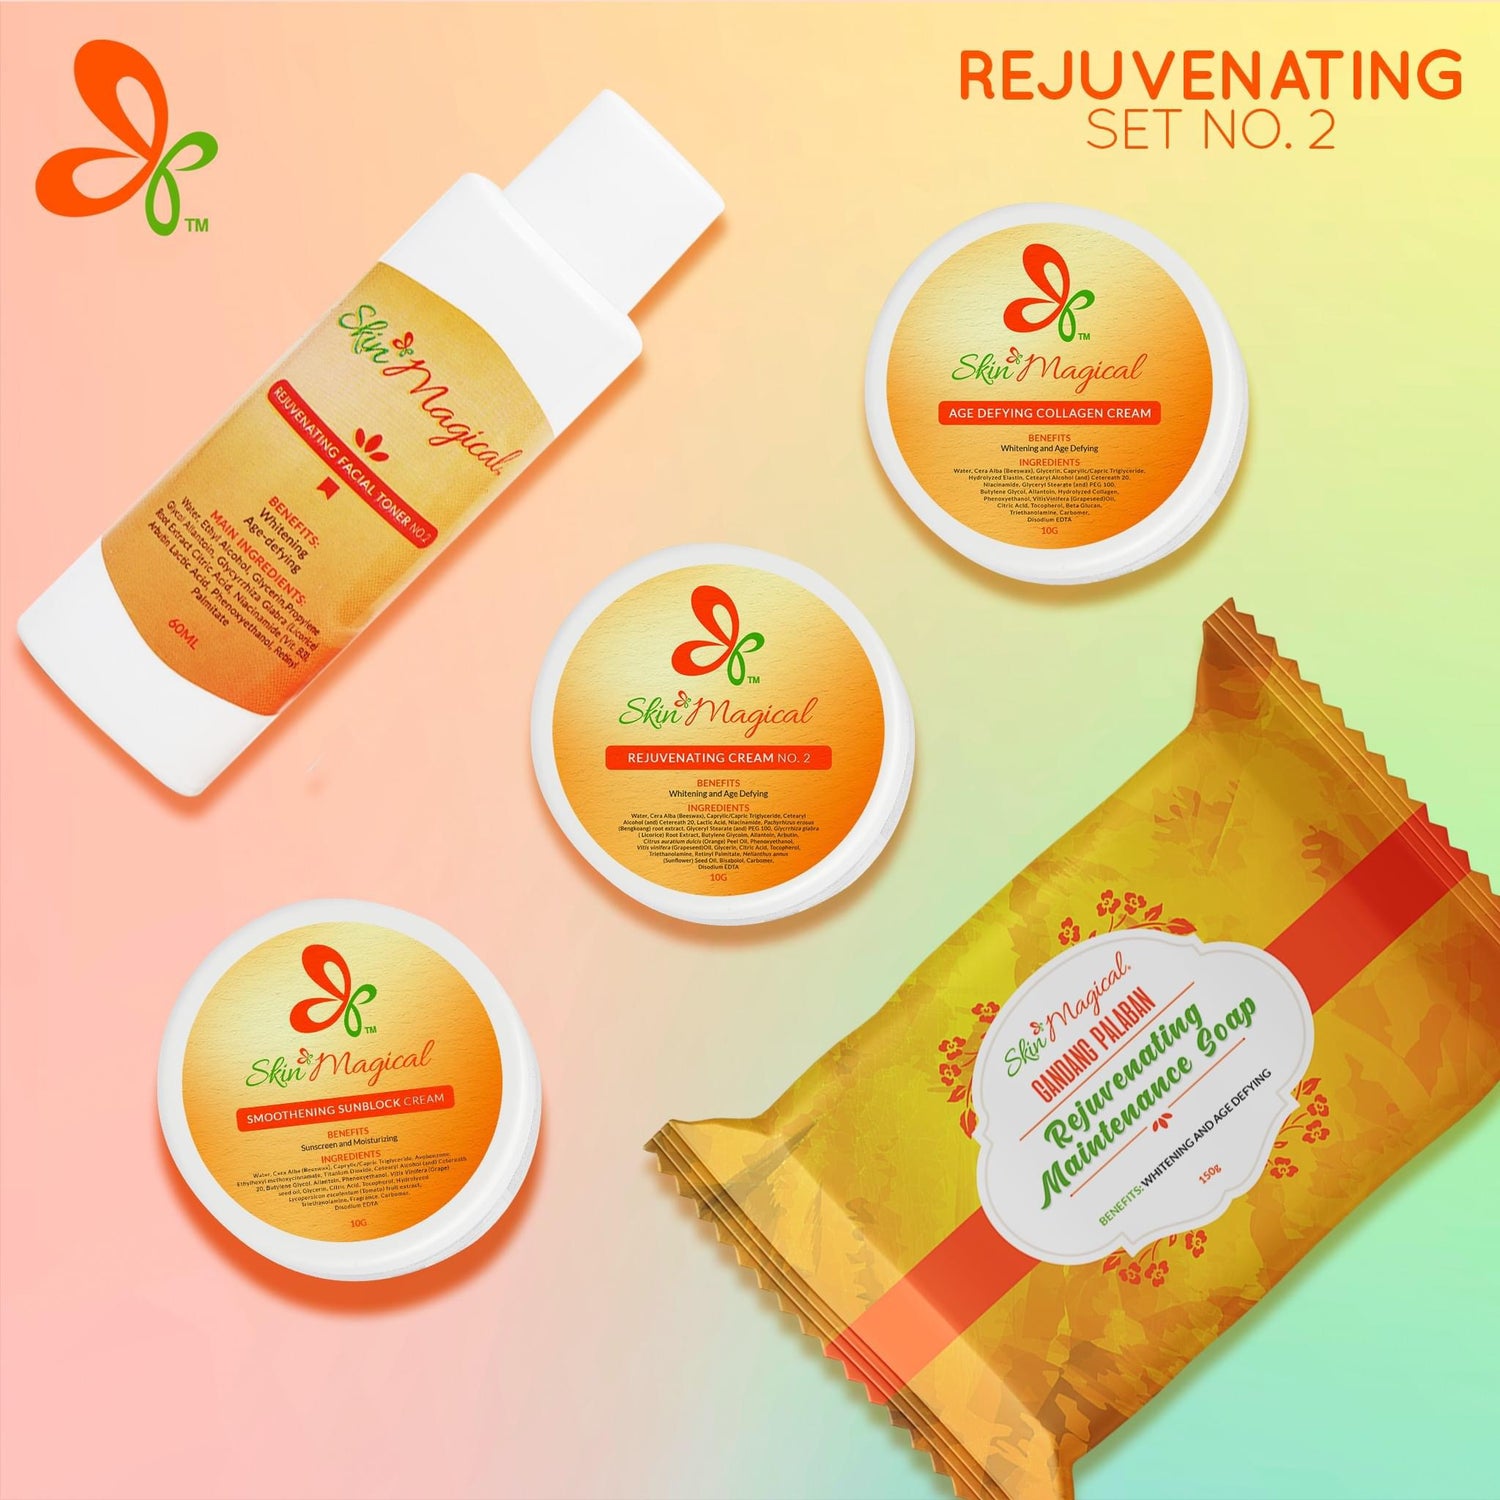 Skin Magical Rejuvenating set 2 - True Beauty Skin Essentials